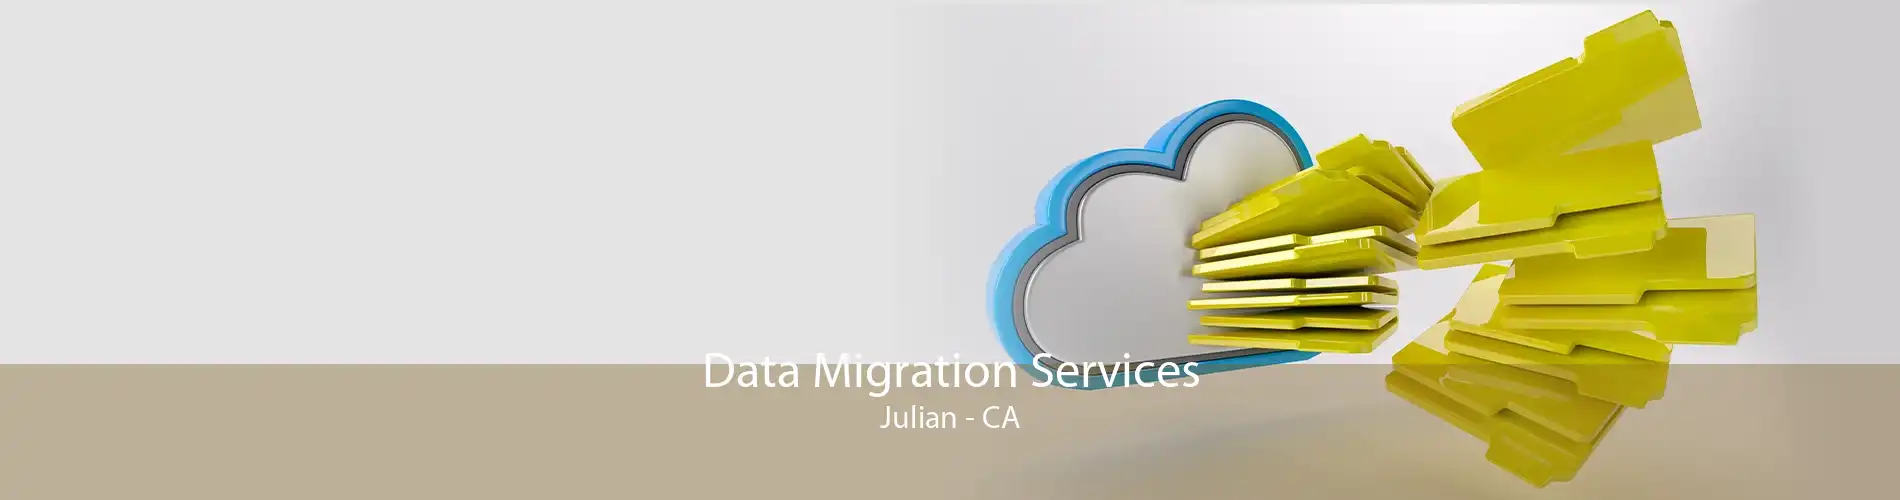 Data Migration Services Julian - CA